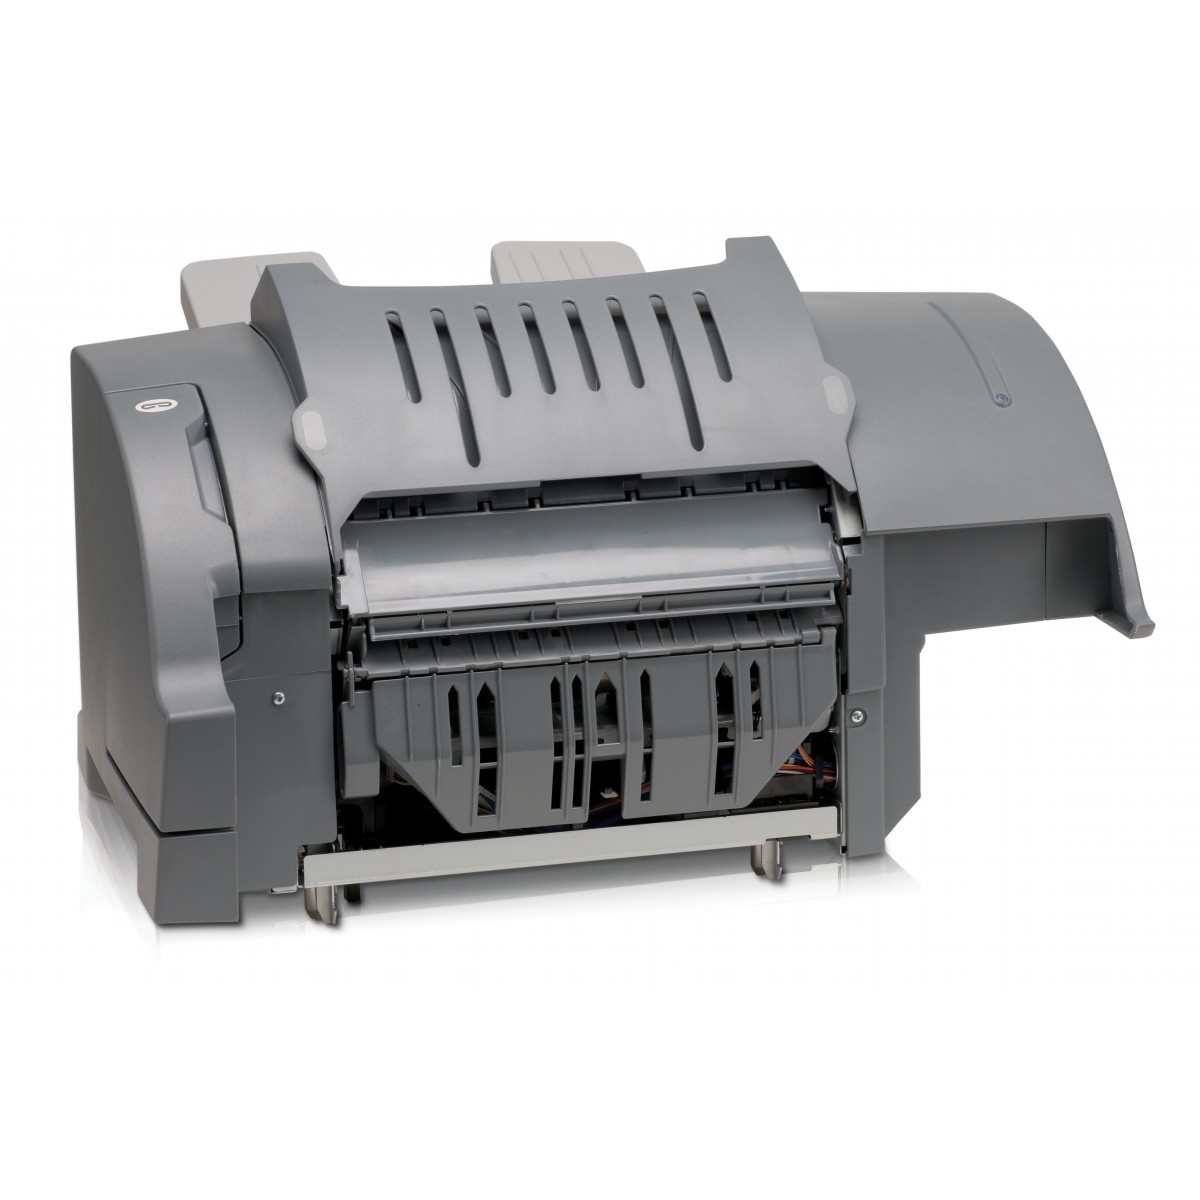 HP LaserJet Q7003A - 750 sheets - HP Color LaserJet - 480.1 x 449.6 x 305 mm - 11.8 kg - 480.1 x 449.6 x 304.8 mm (18.9 x 17.7 x